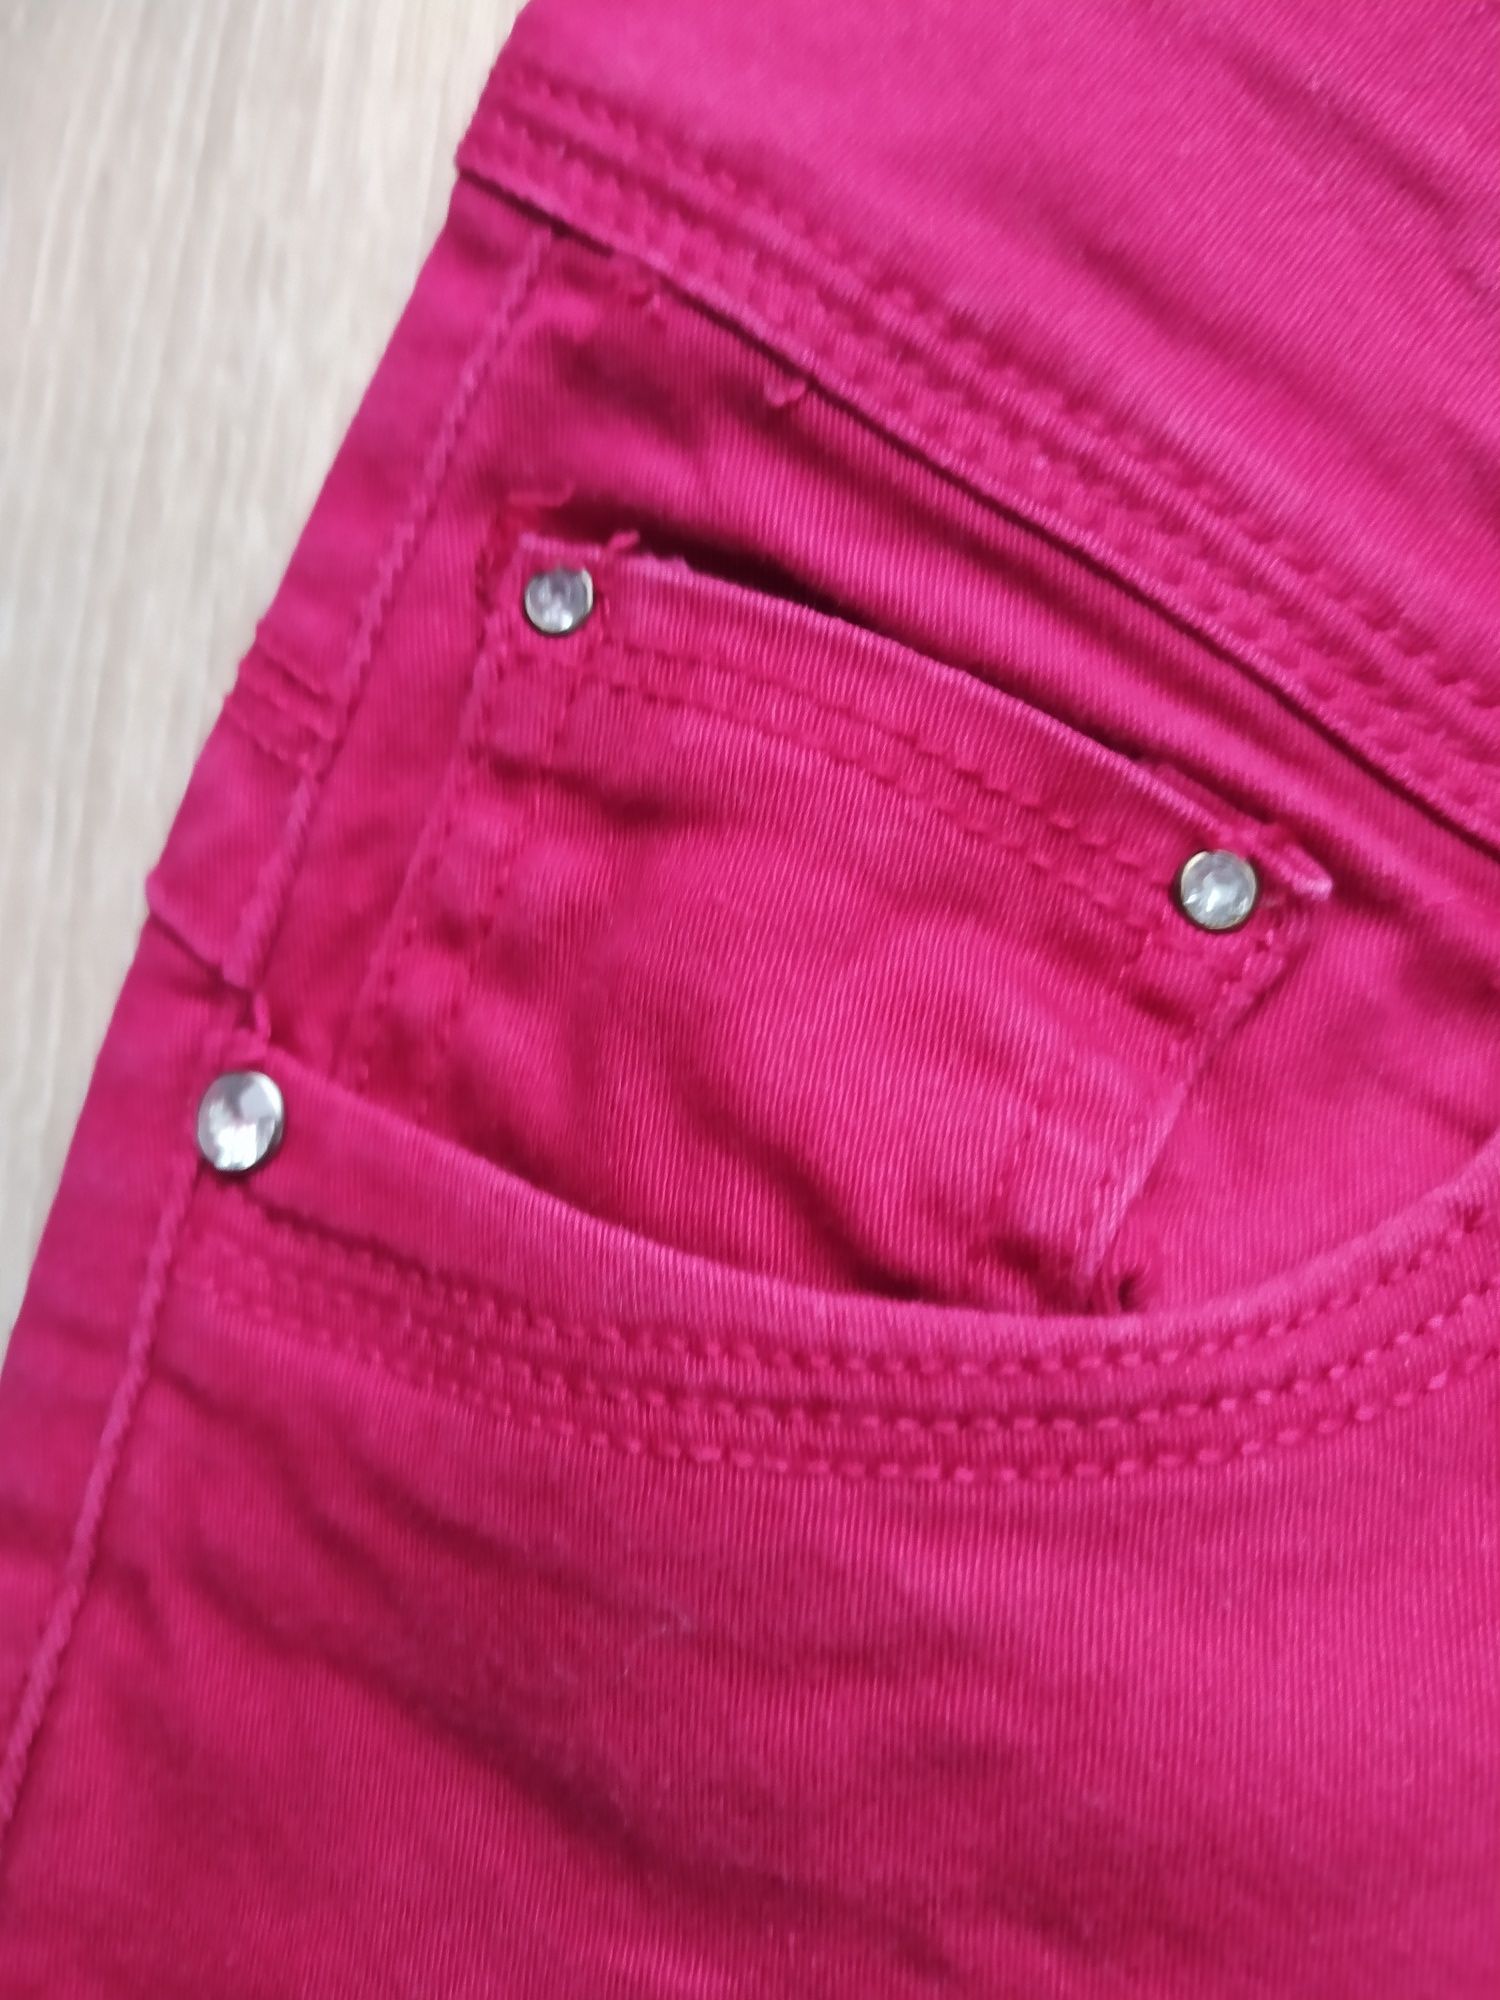 Spodnie damskie materiałowe rozmiar M